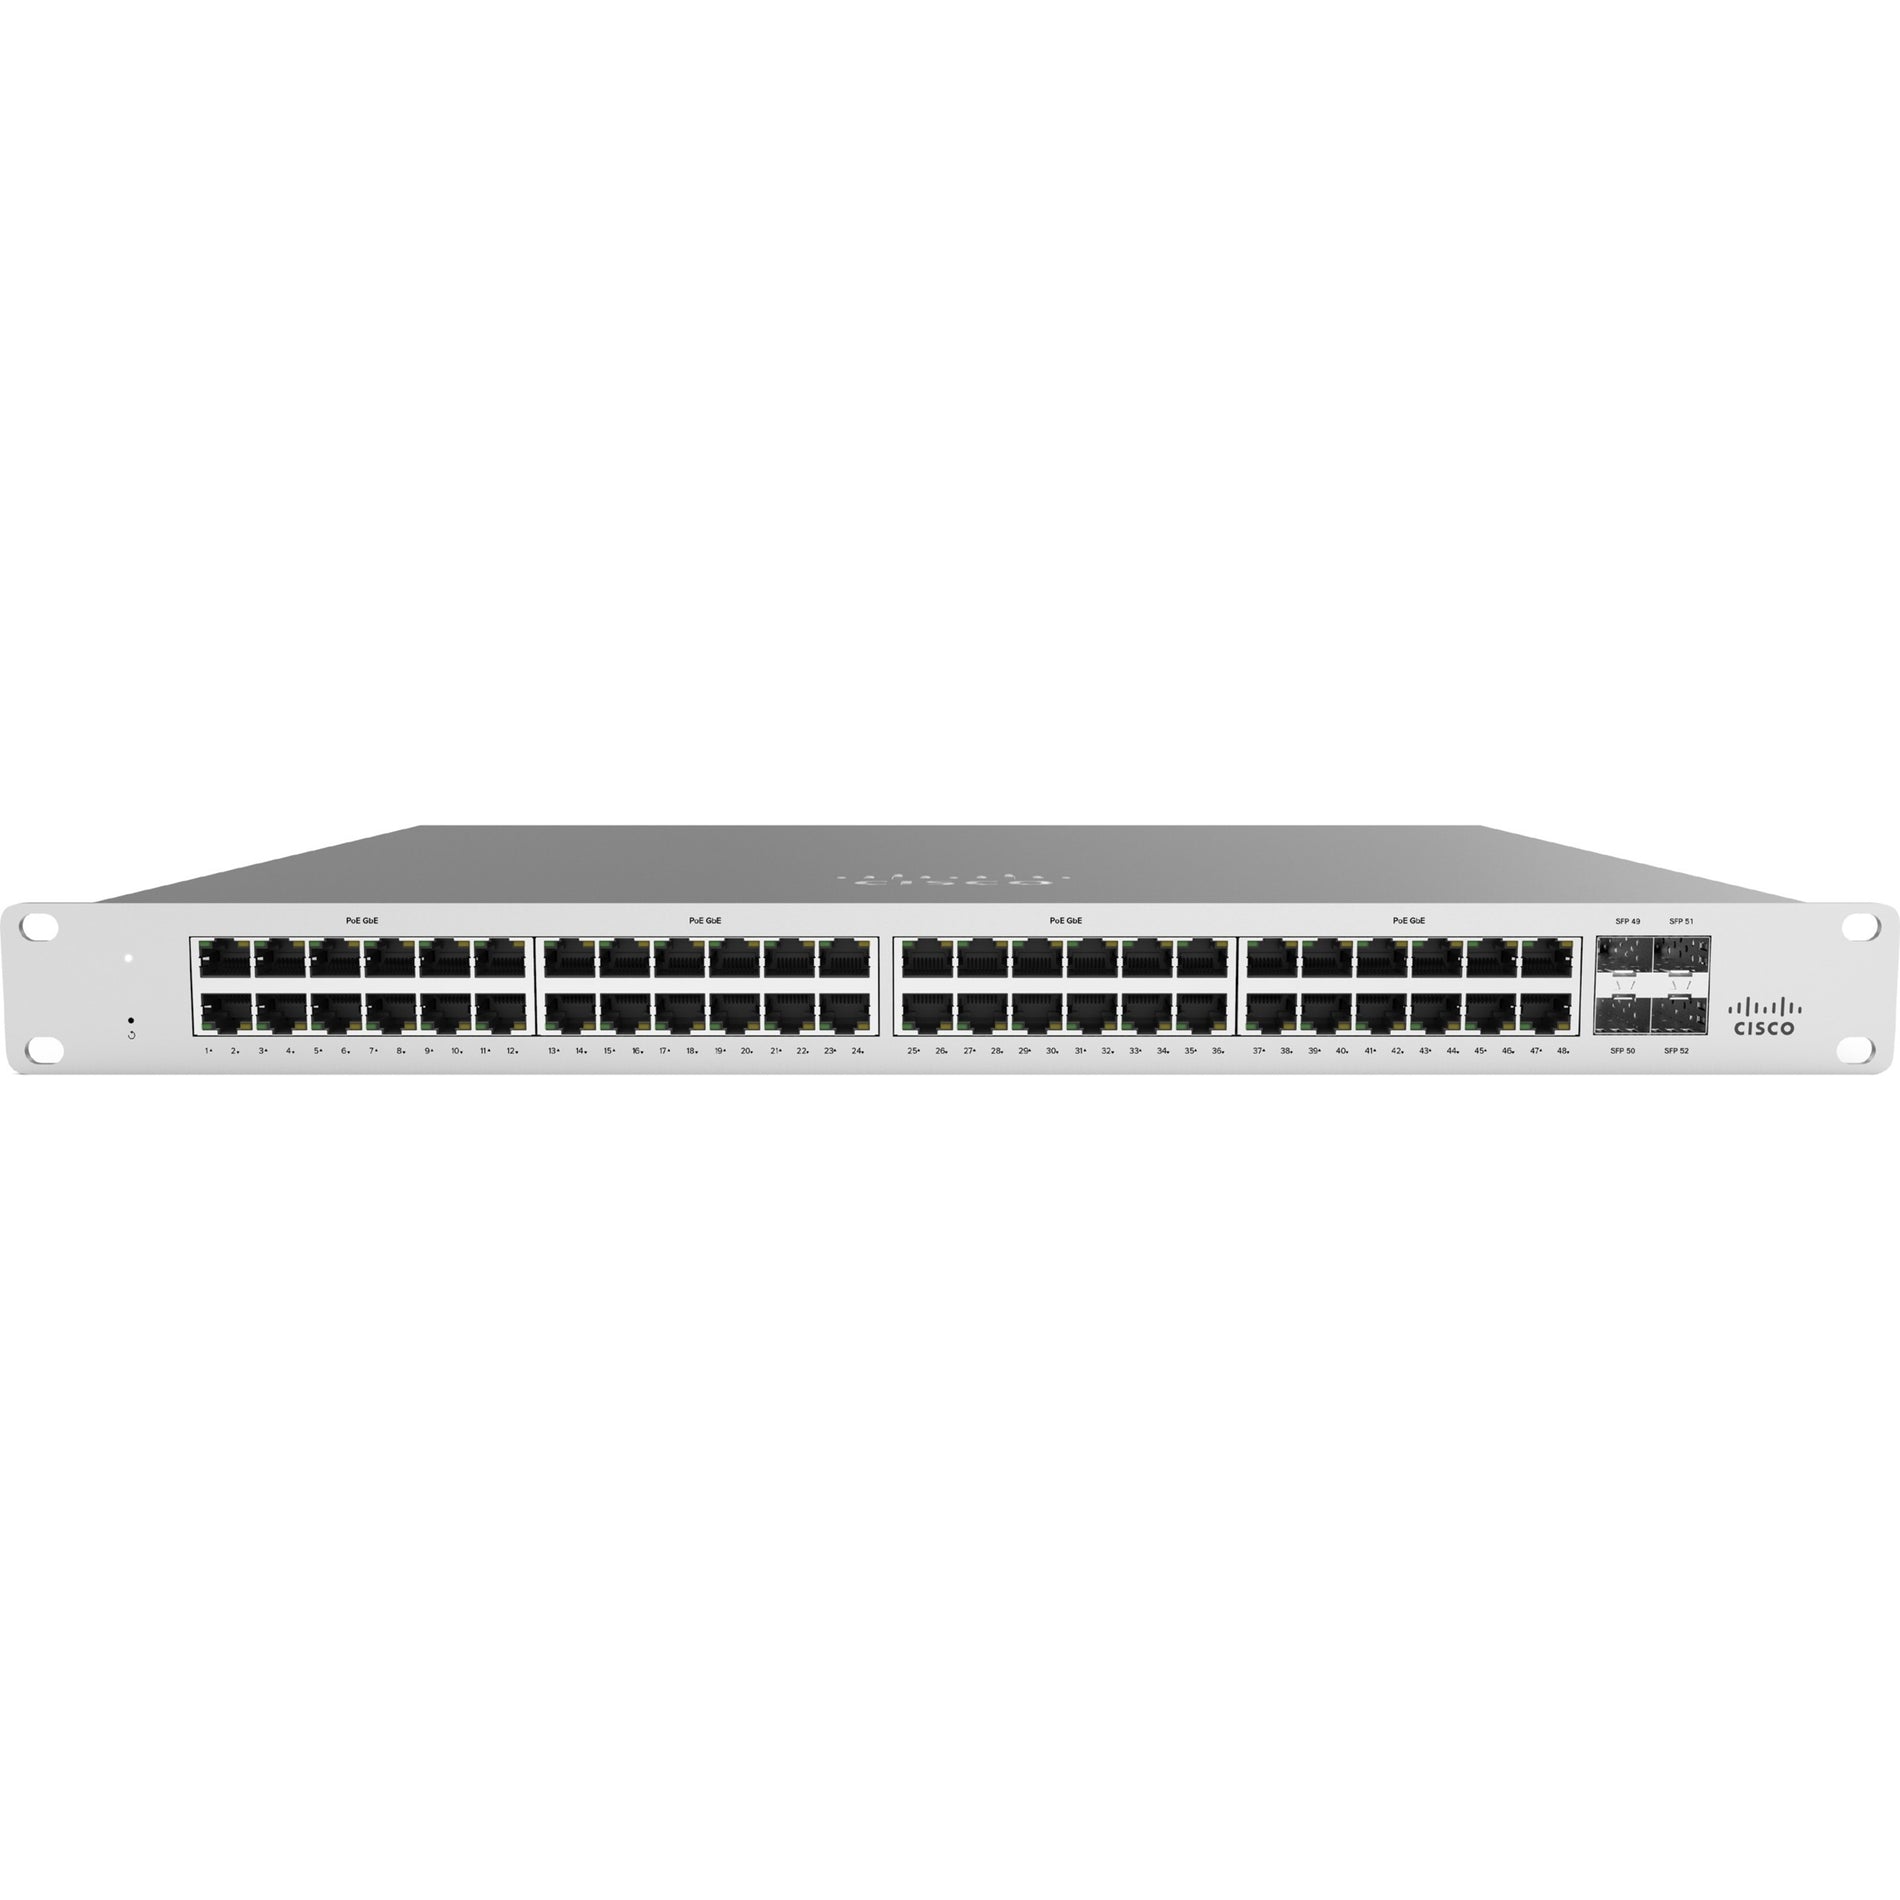 Meraki MS120-48LP Ethernet Switch (MS120-48LP-HW)